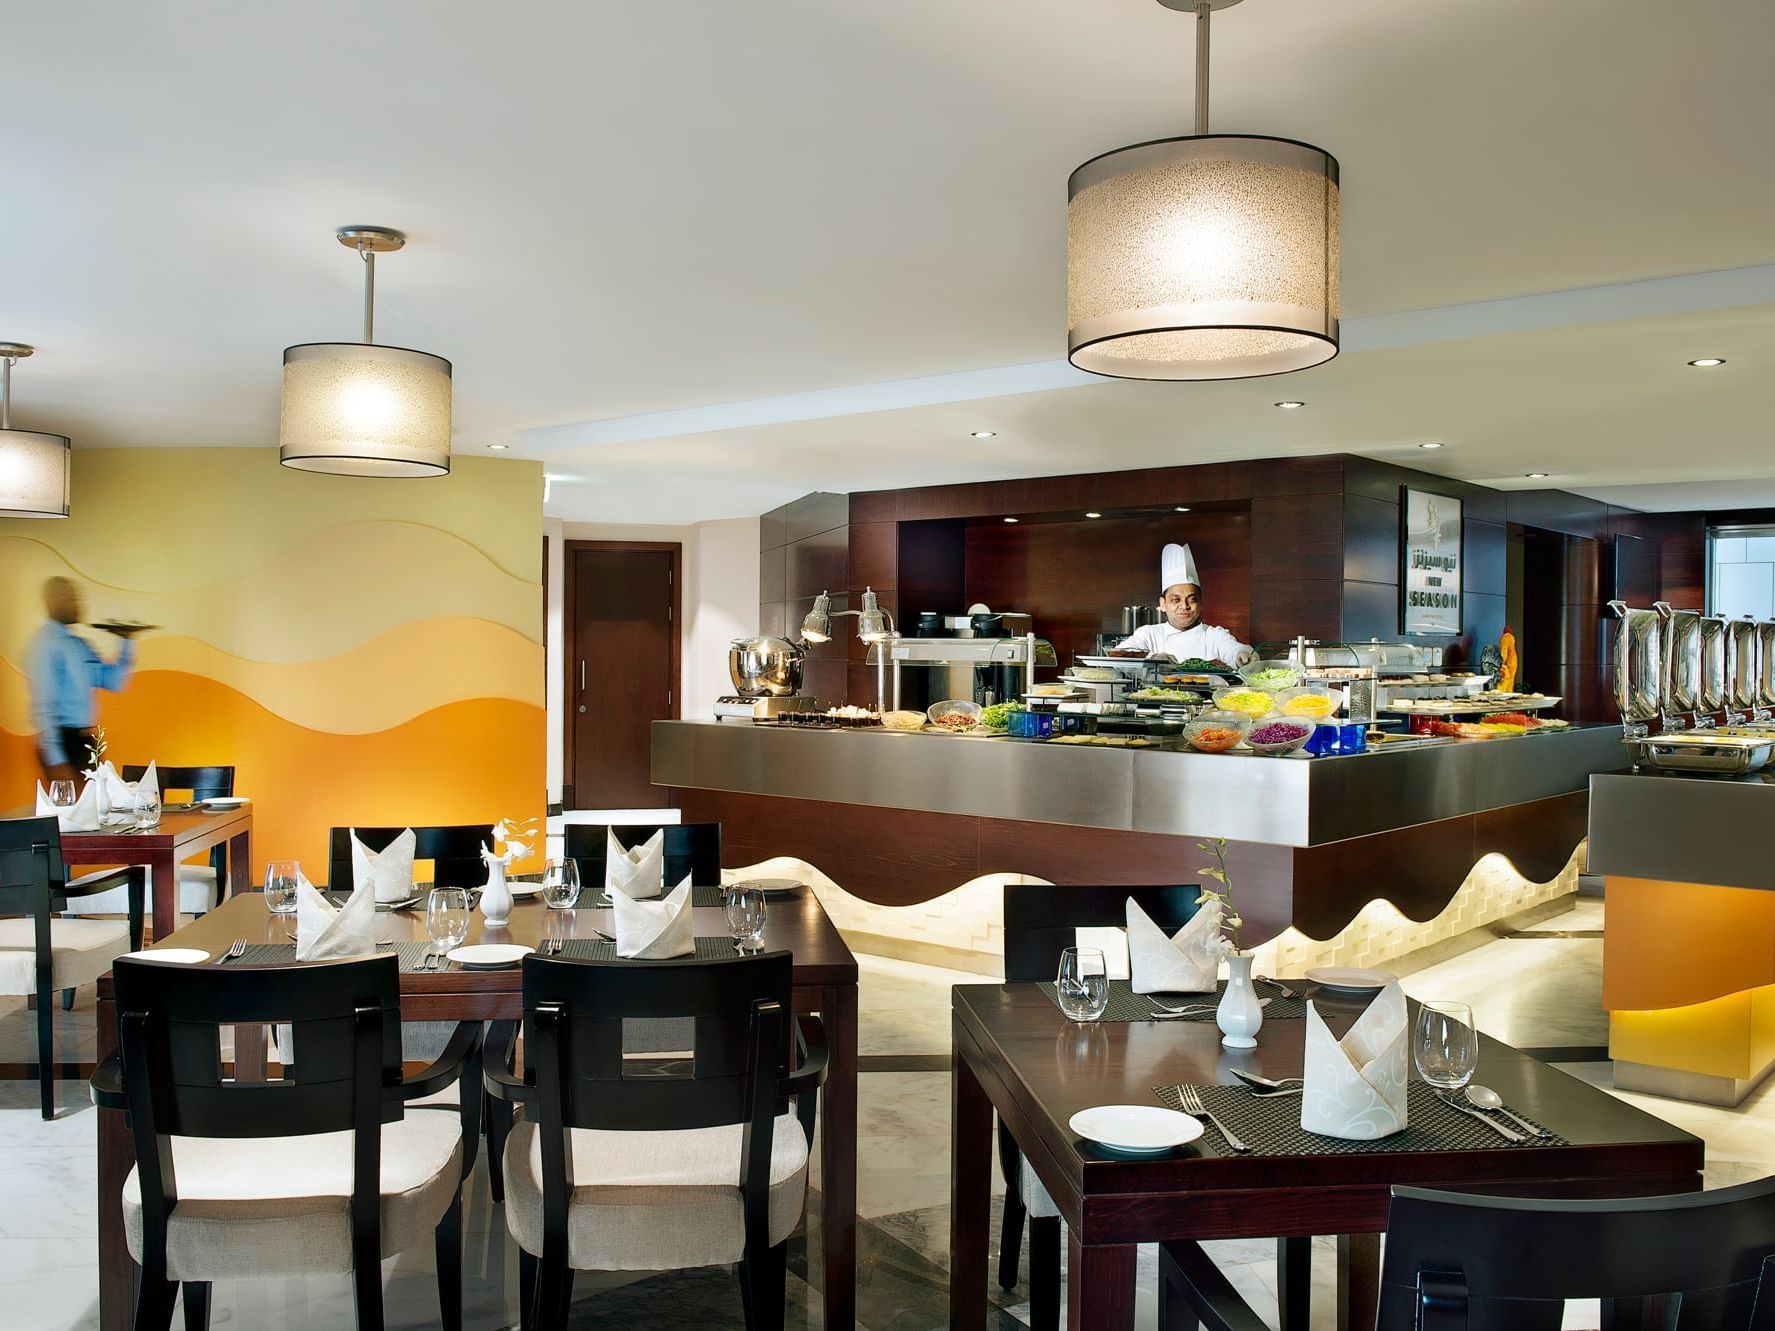 Dining area & buffet in New Season at City Seasons Hotels